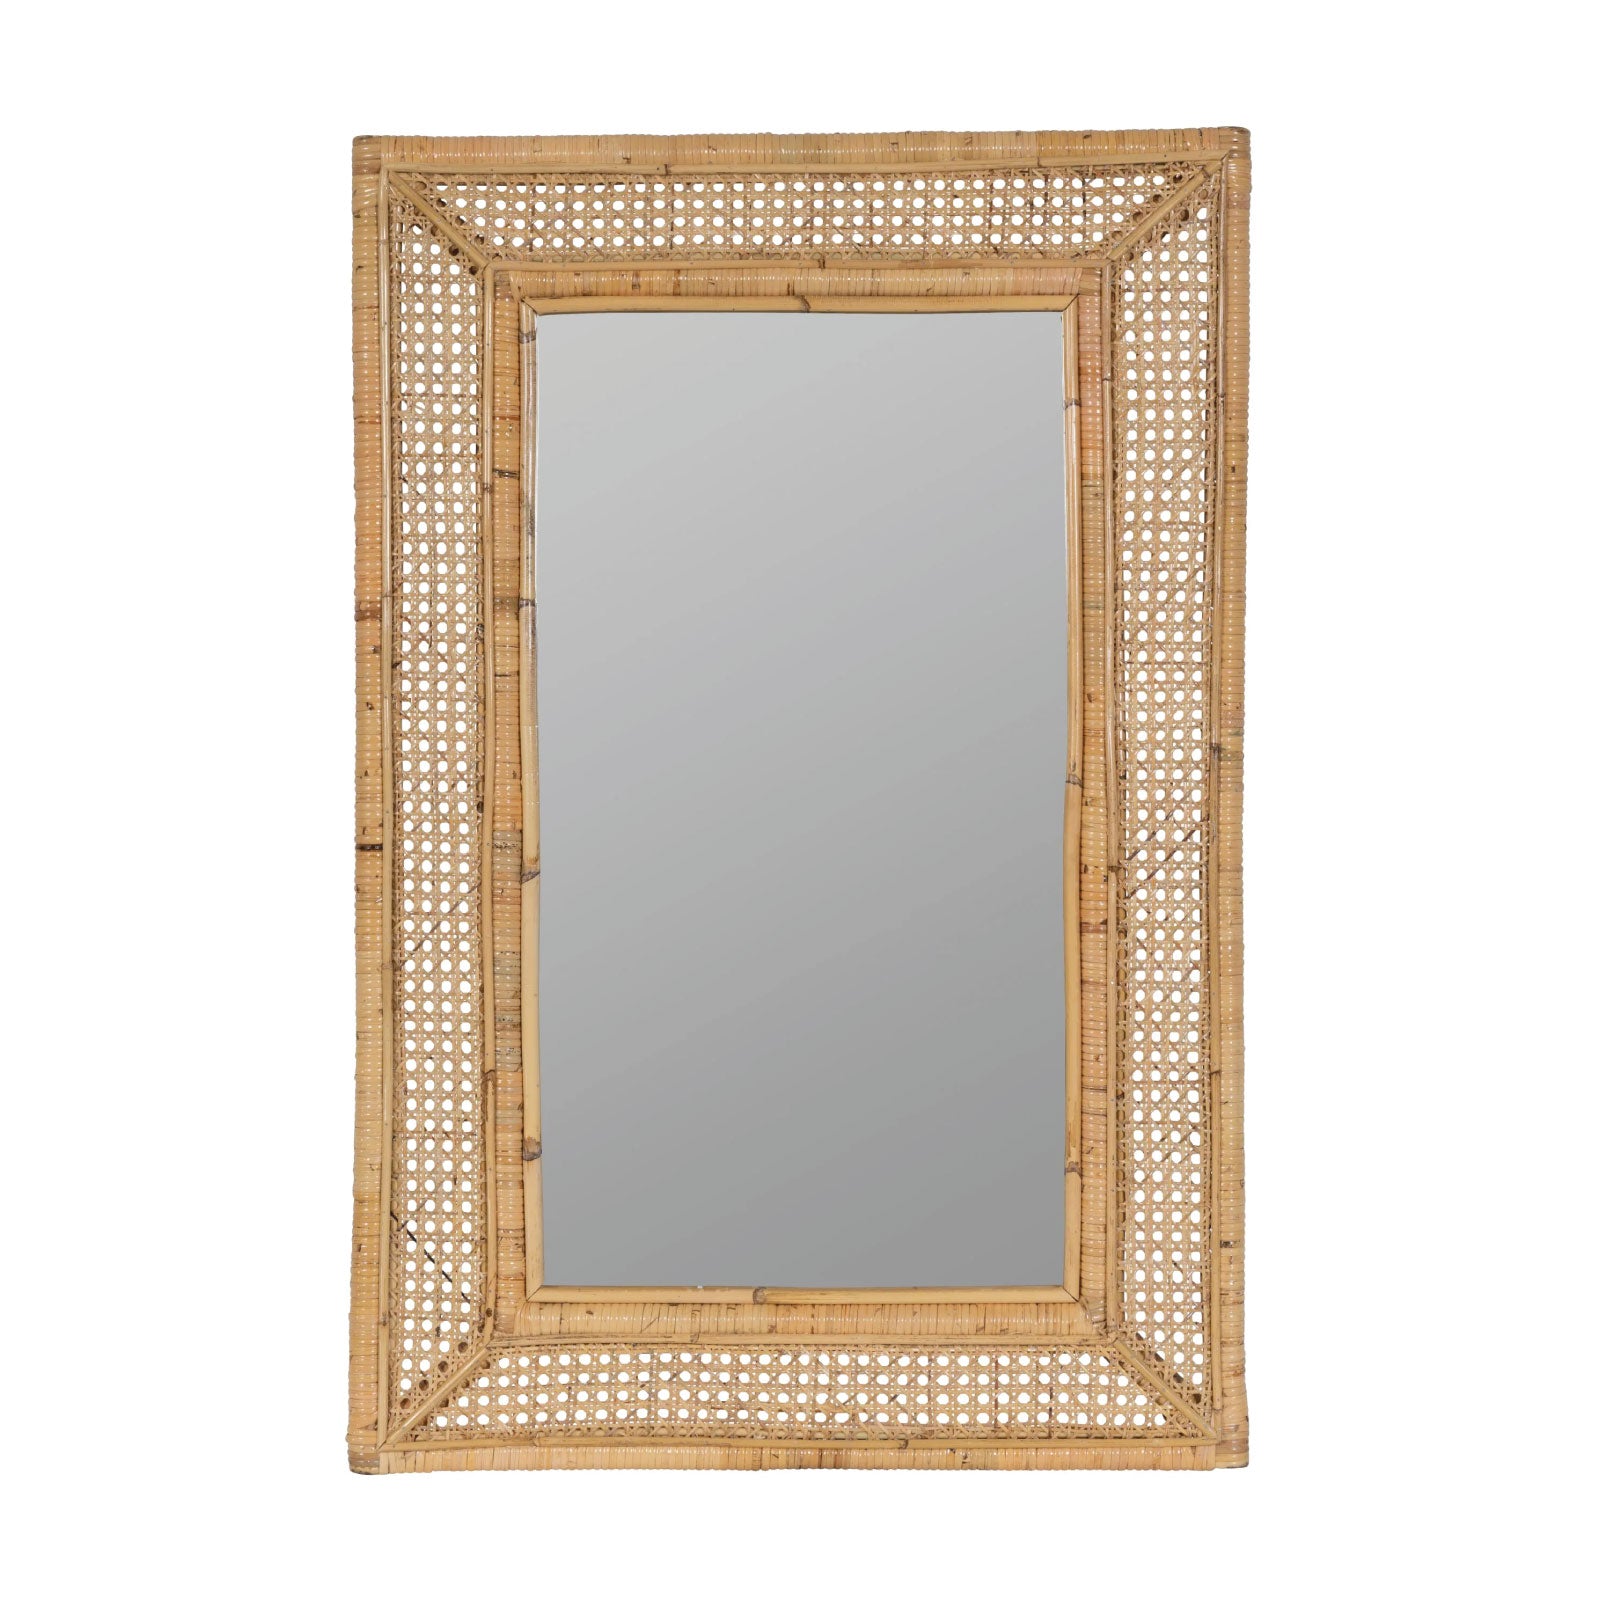 Danette Wall Mirror